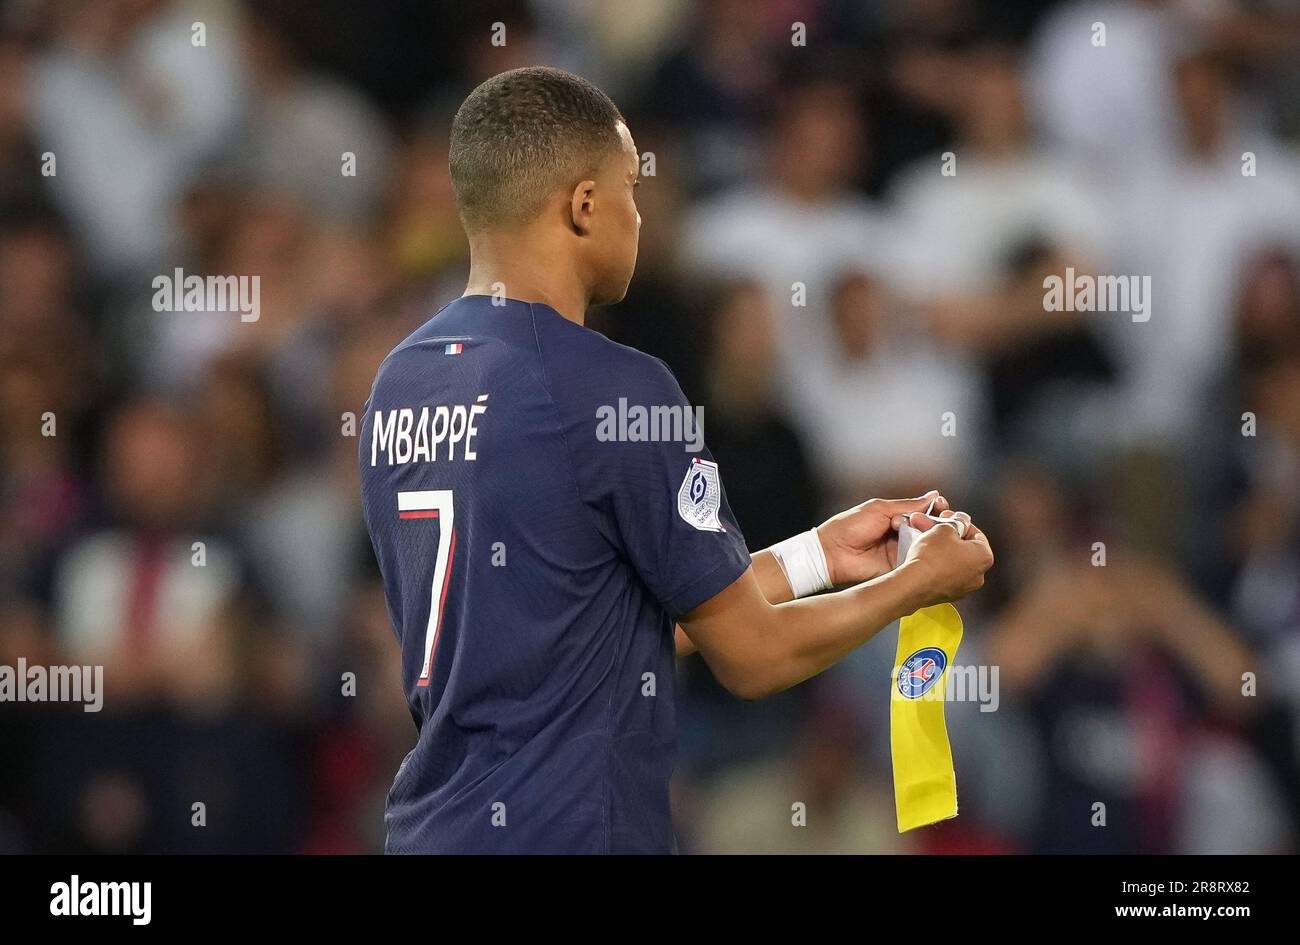 Kylian Mbappe of PSG with the captains armband during the Ligue 1 match between Paris Saint Germain and Clermont Foot at Parc des Princes, Paris, Fran Stock Photo